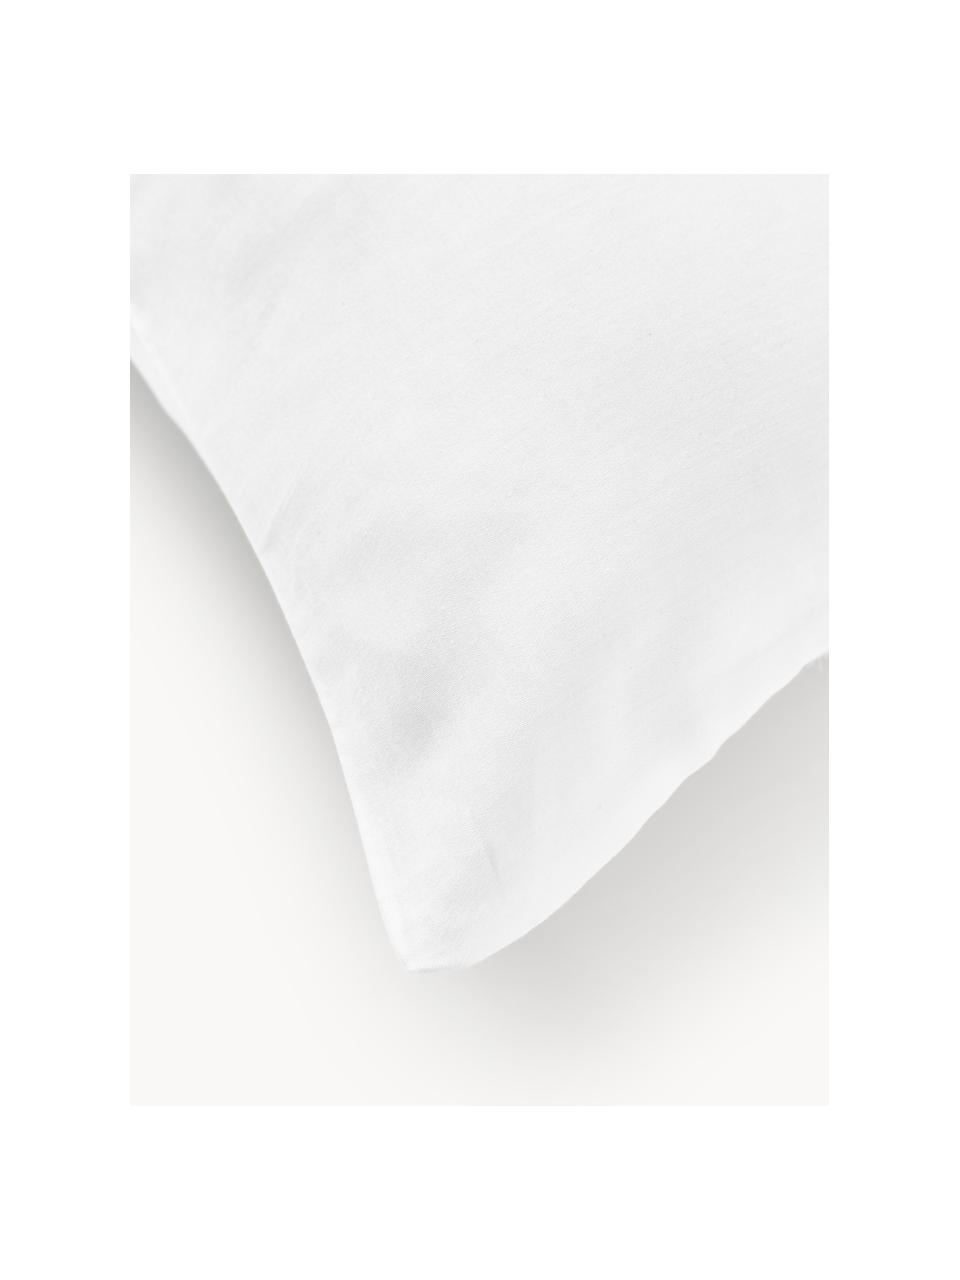 Funda de almohada de satén Comfort, Blanco, An 45 x L 110 cm